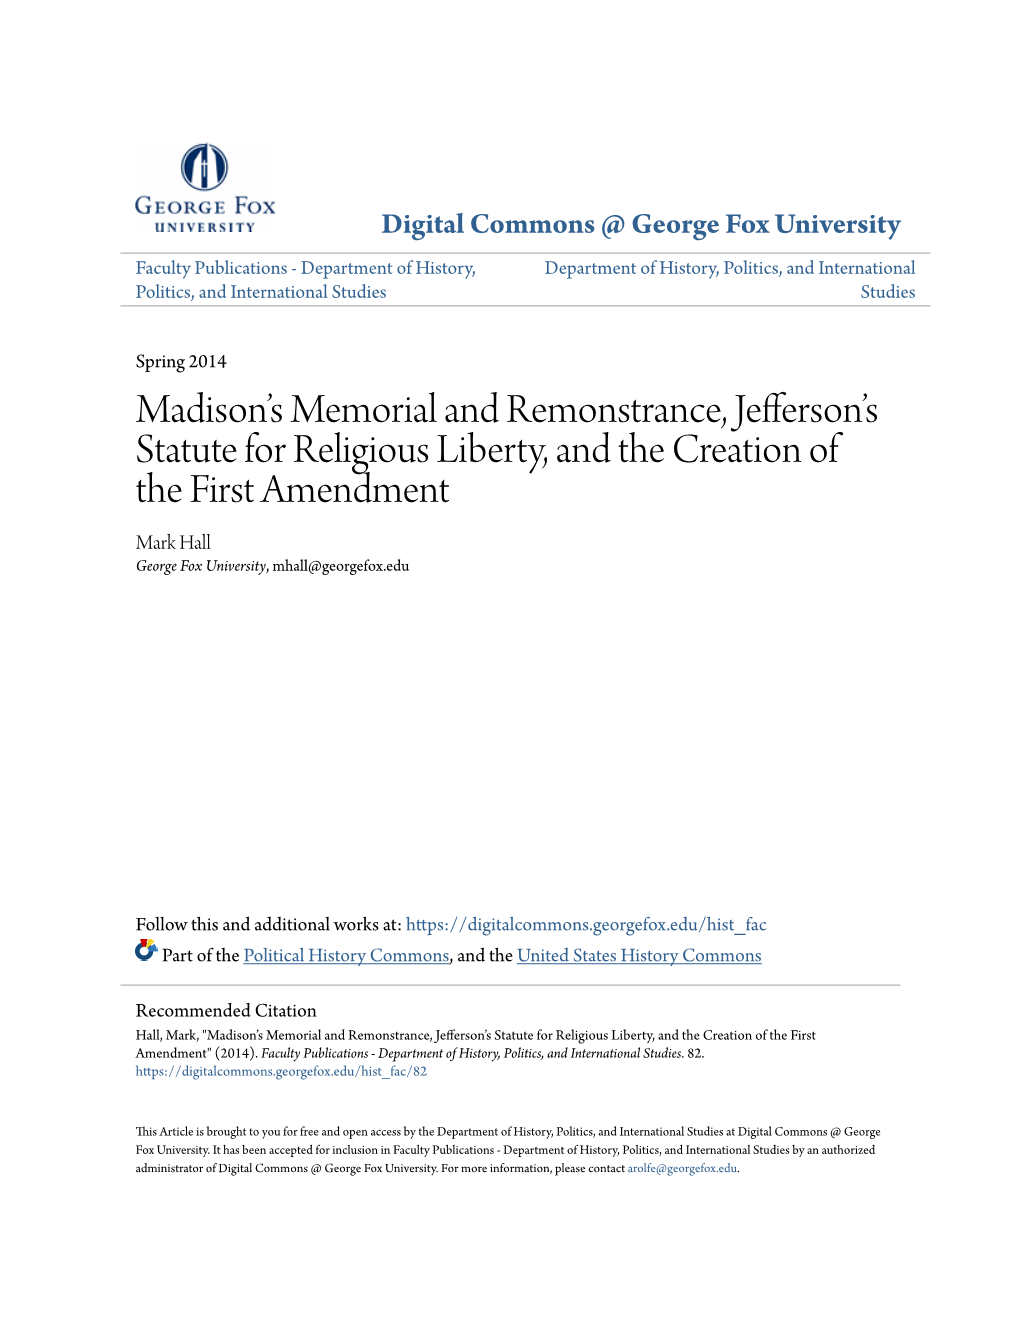 Madison's Memorial and Remonstrance, Jefferson's Statute